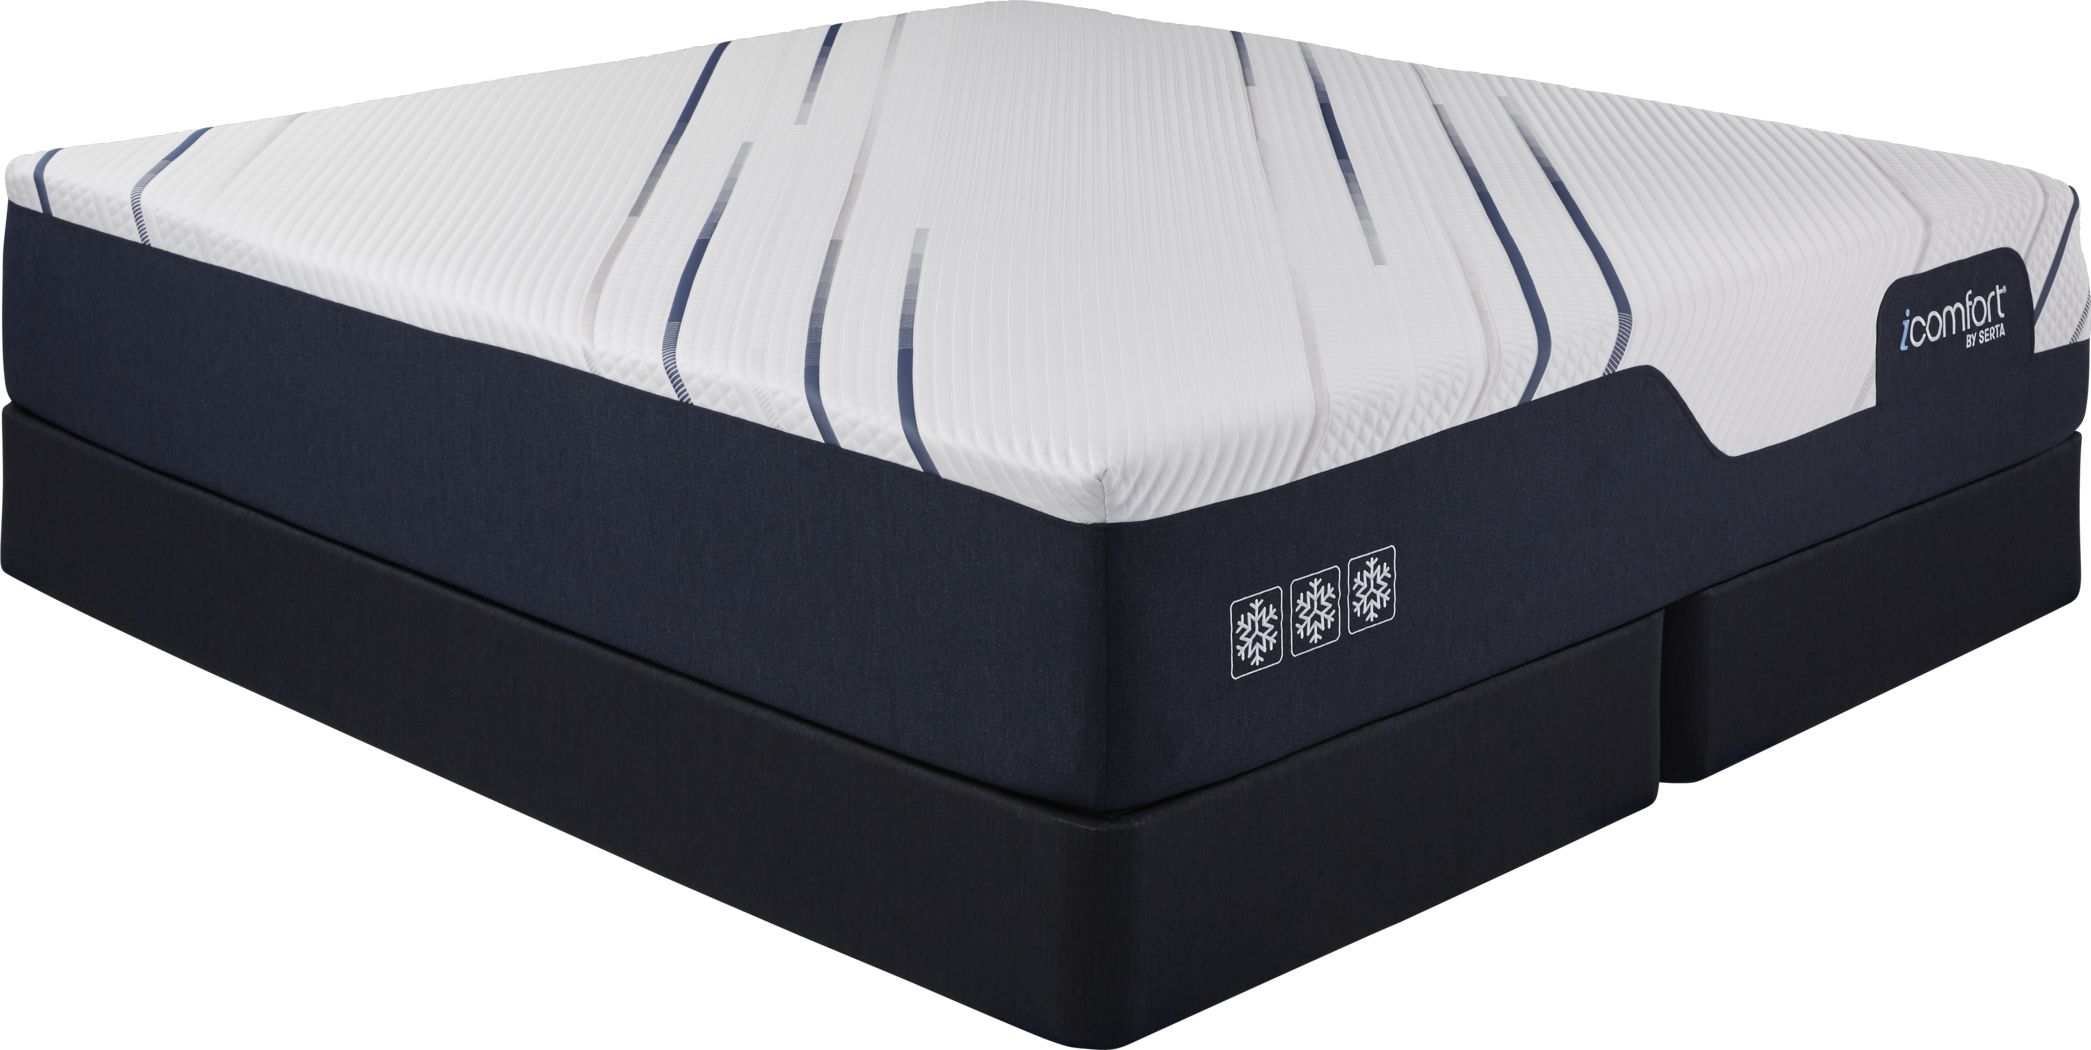 serta icomfort cf3000 mattress